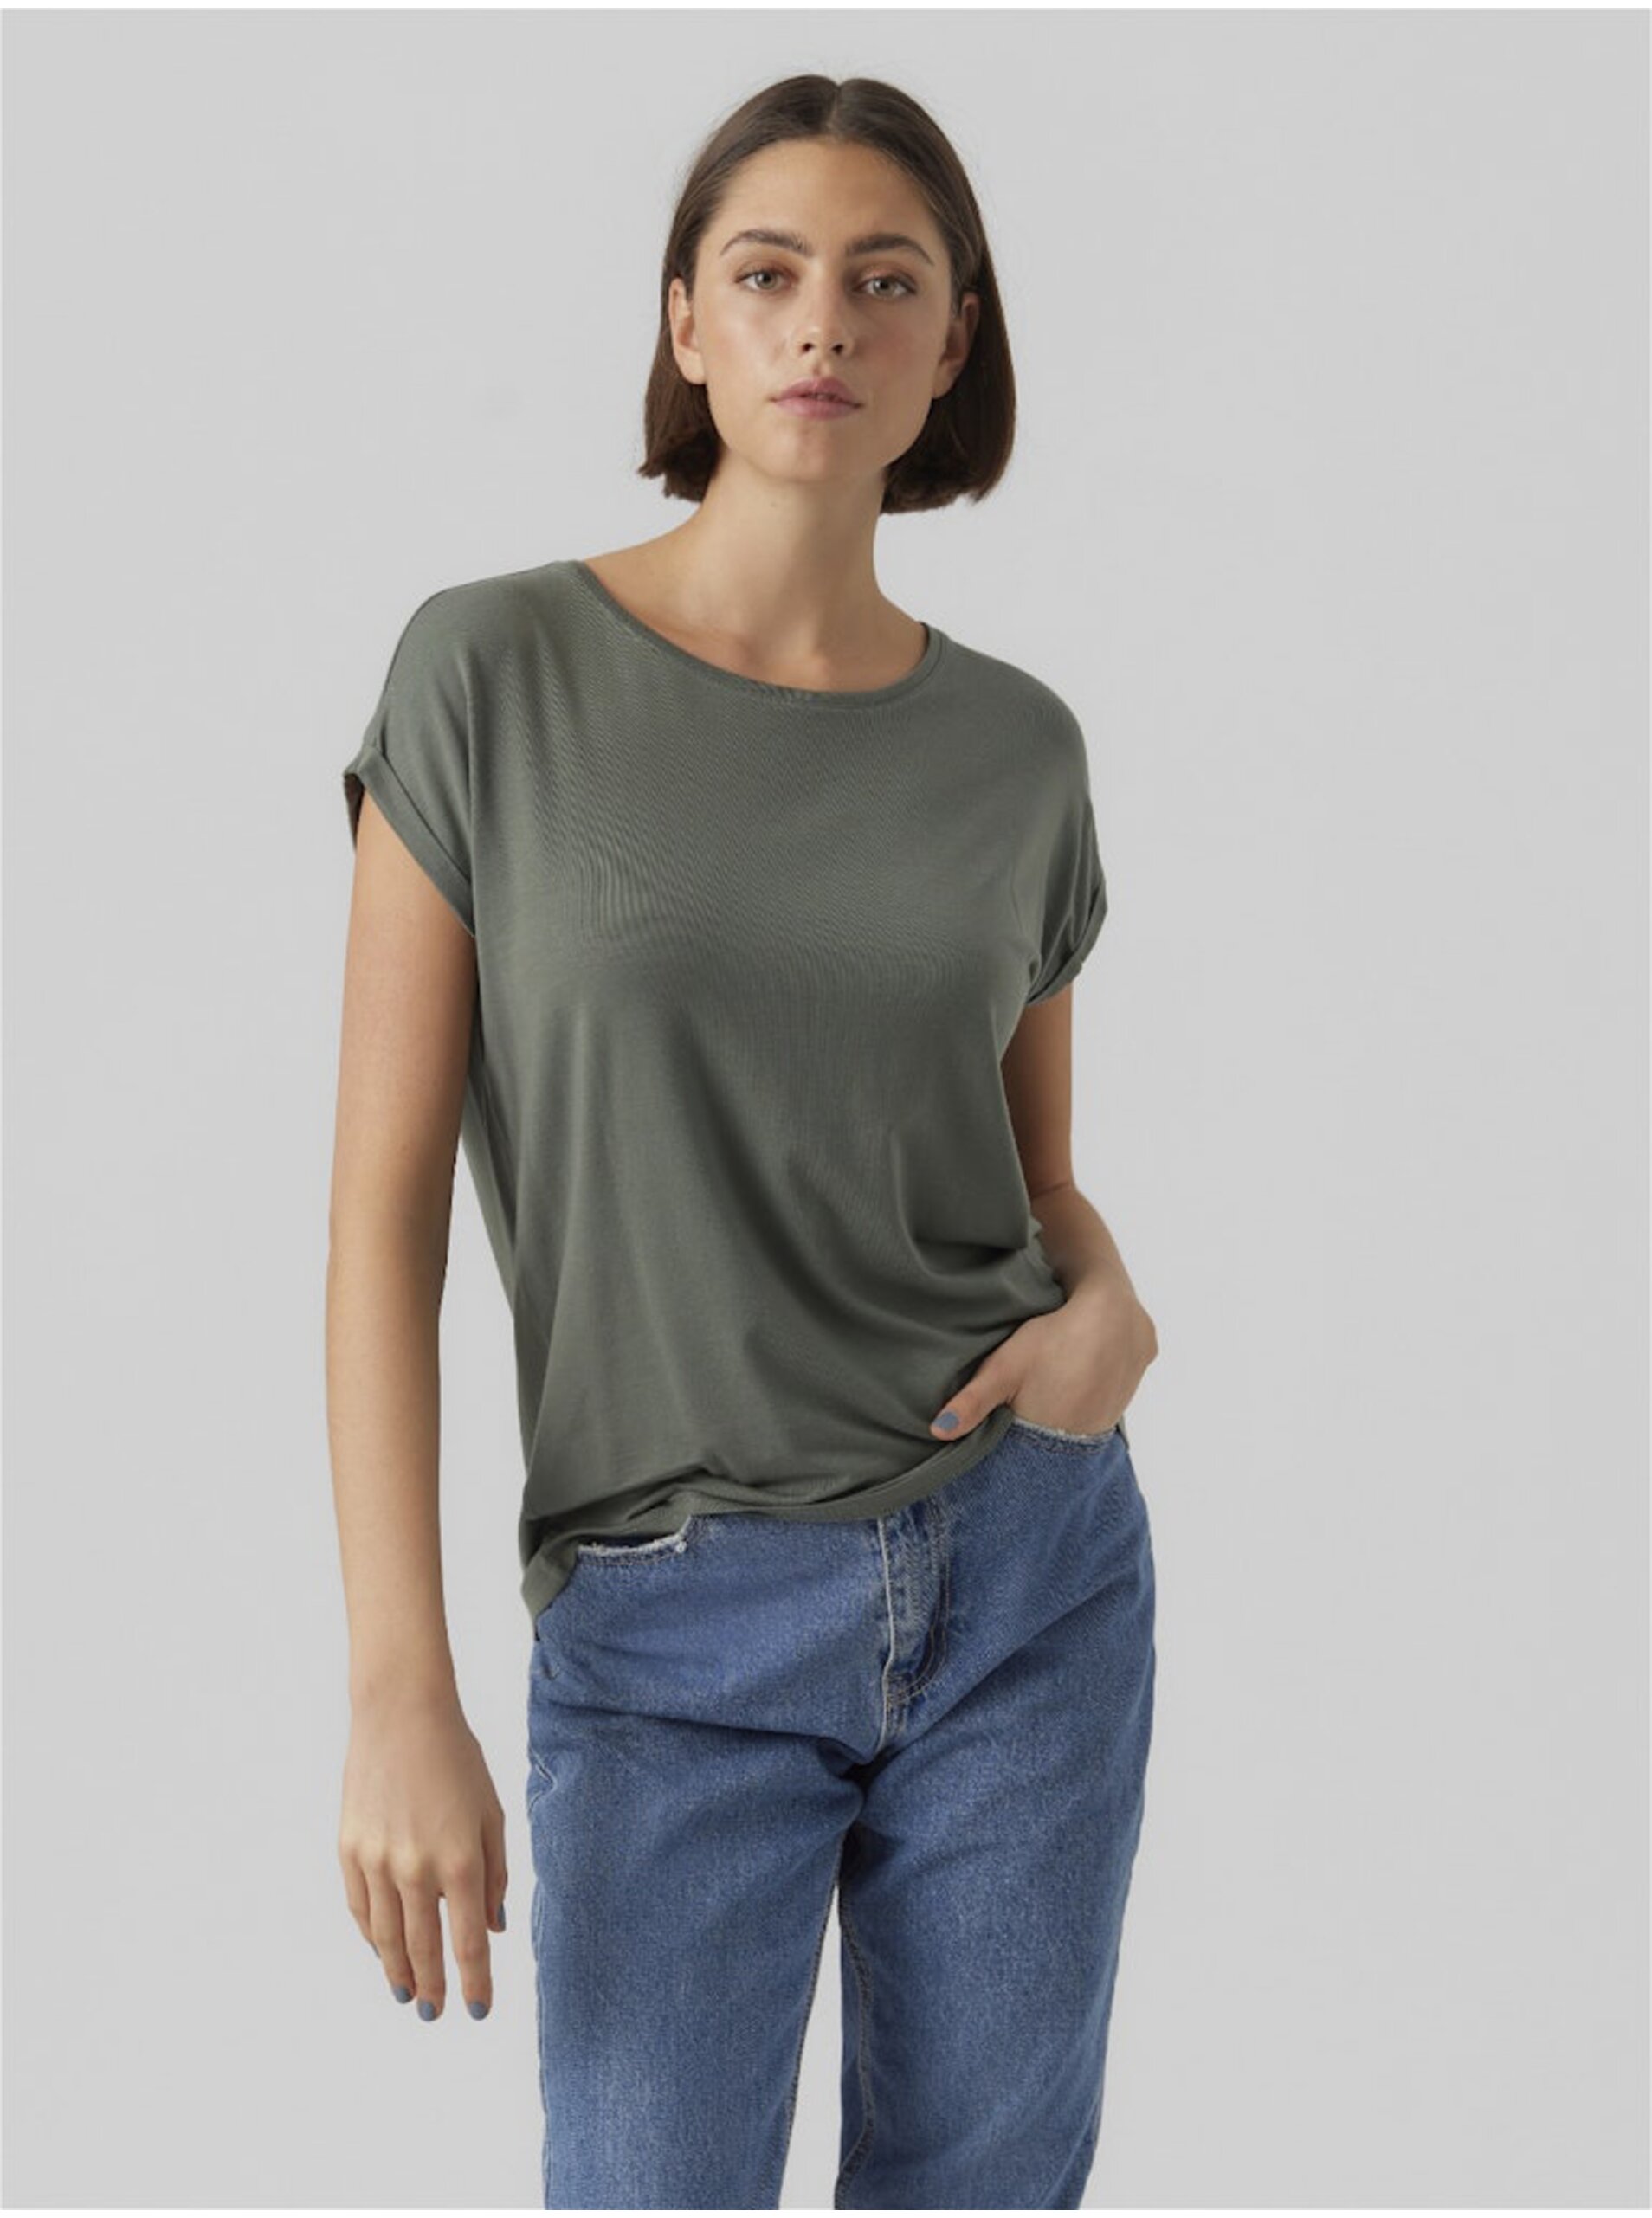 Vero Moda Ava Green Women's T-Shirt - Women